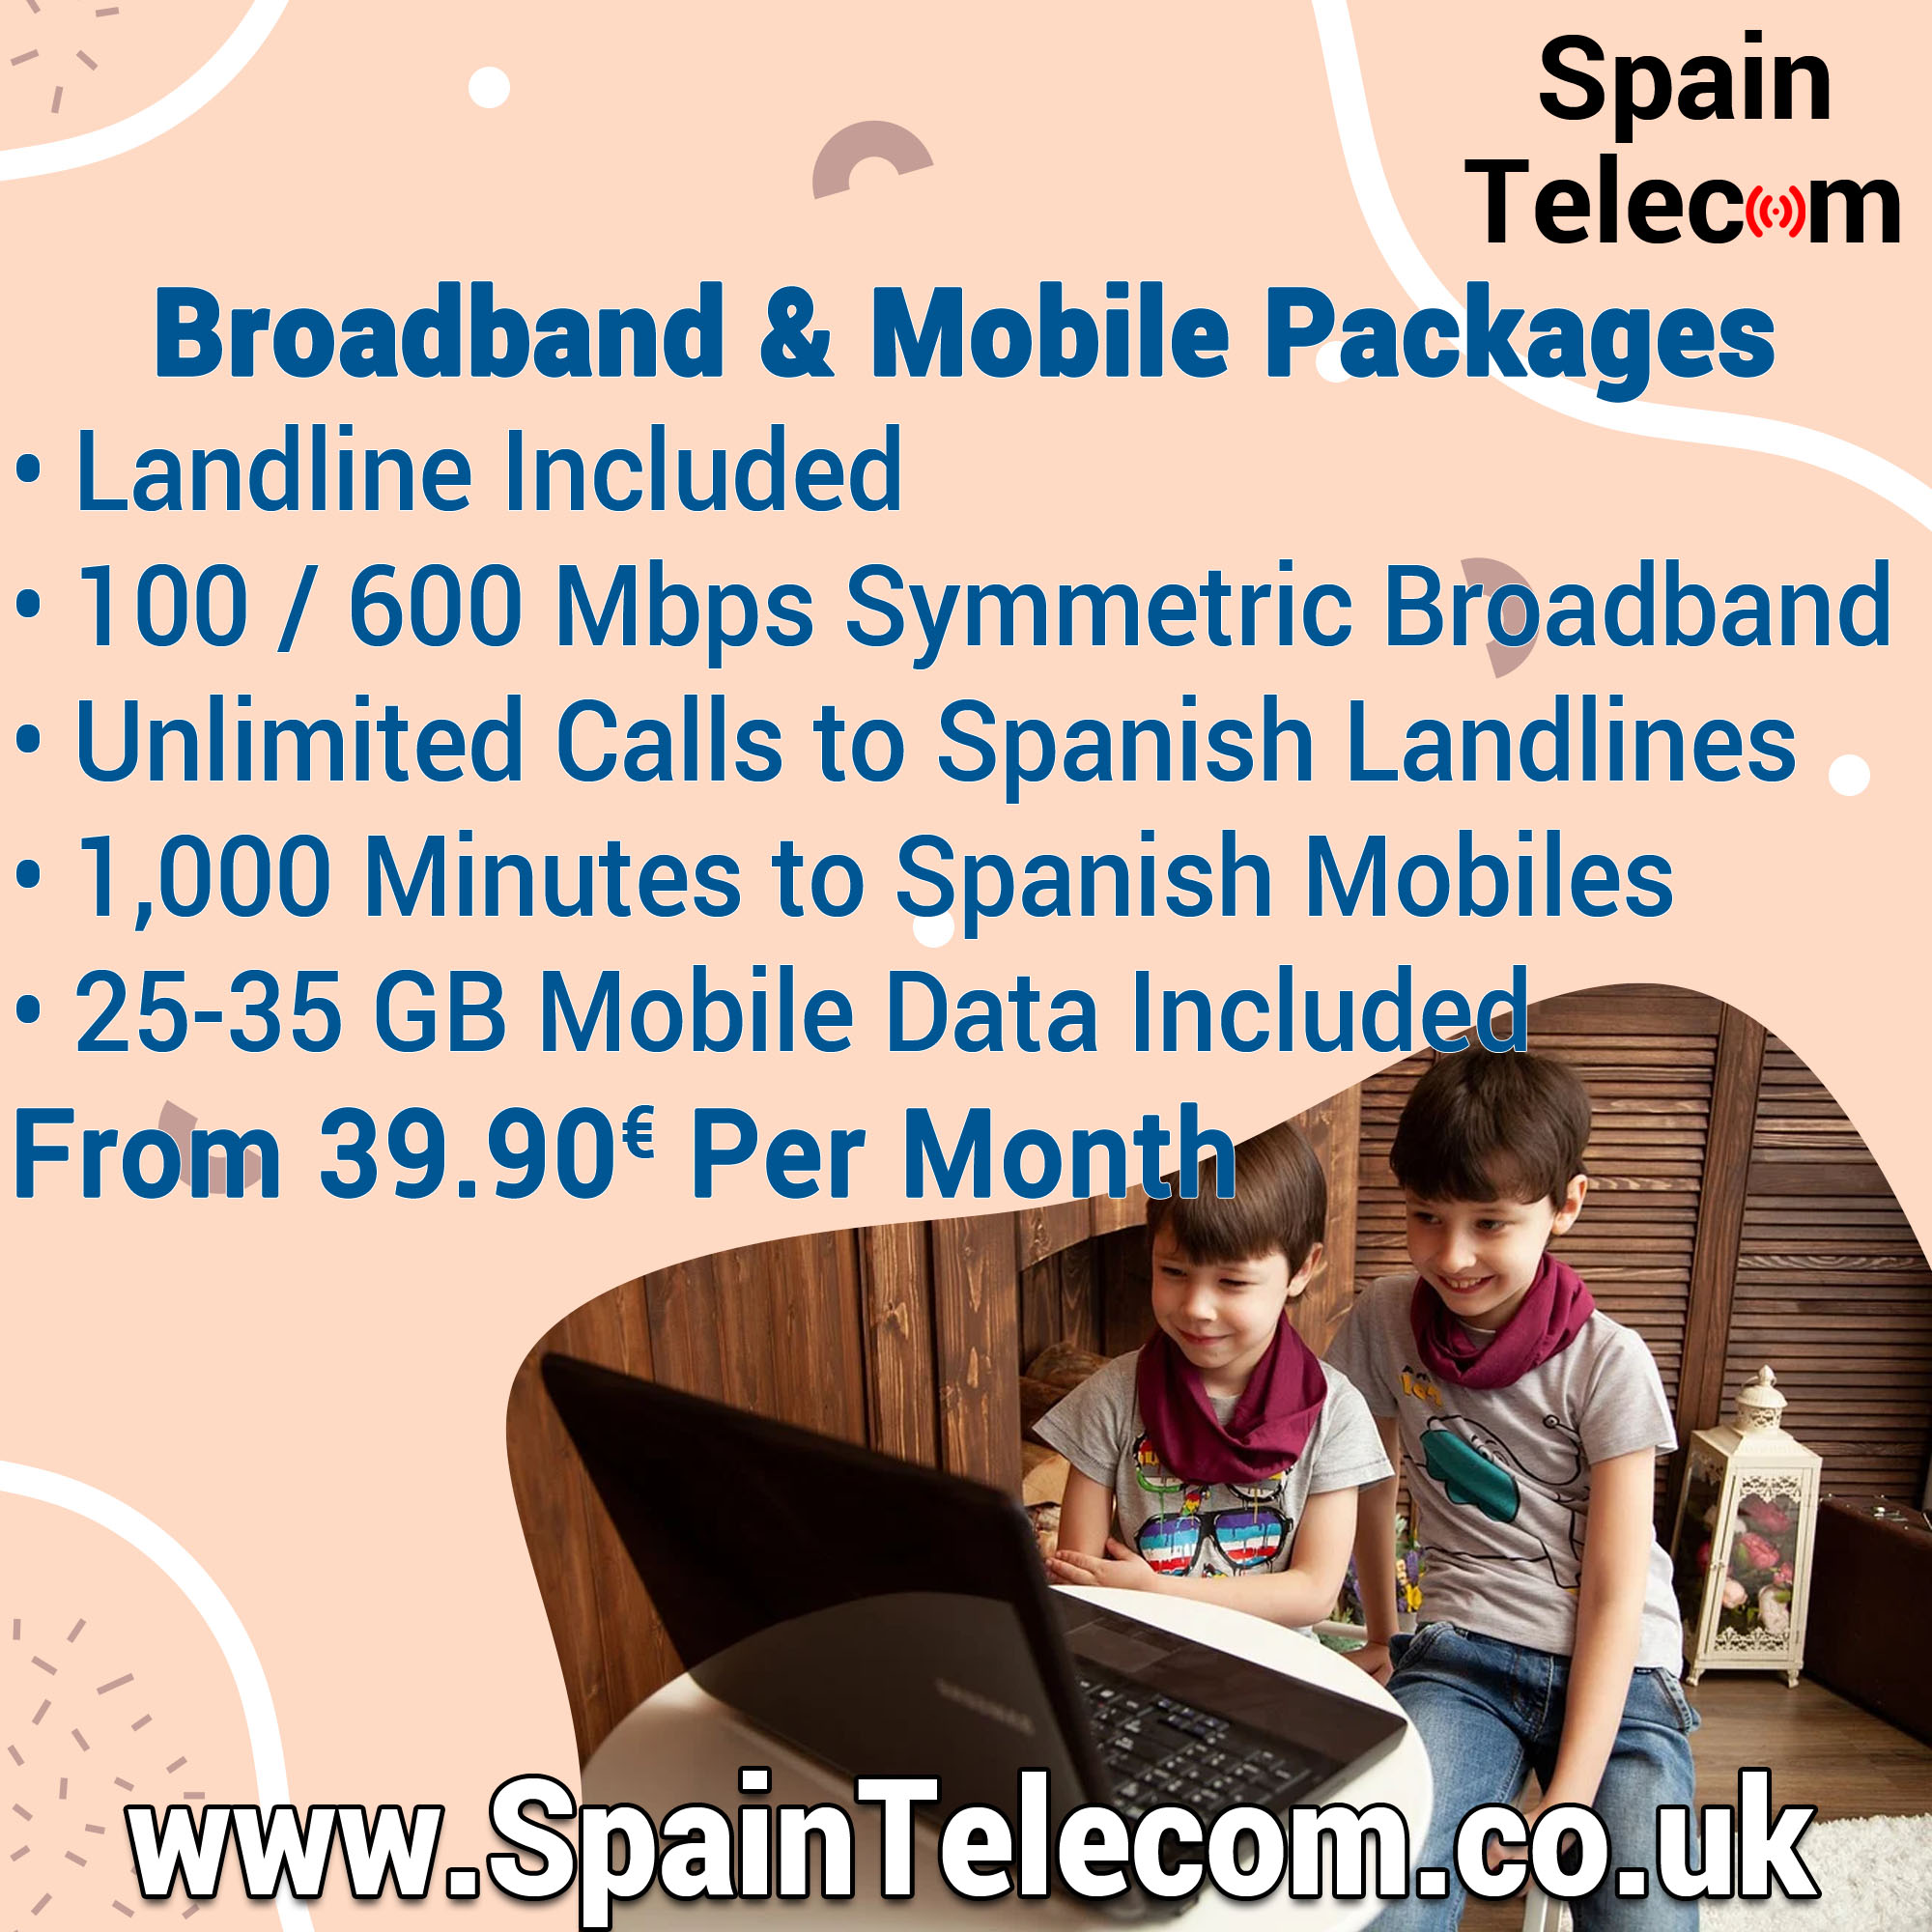 Broadband & Mobile